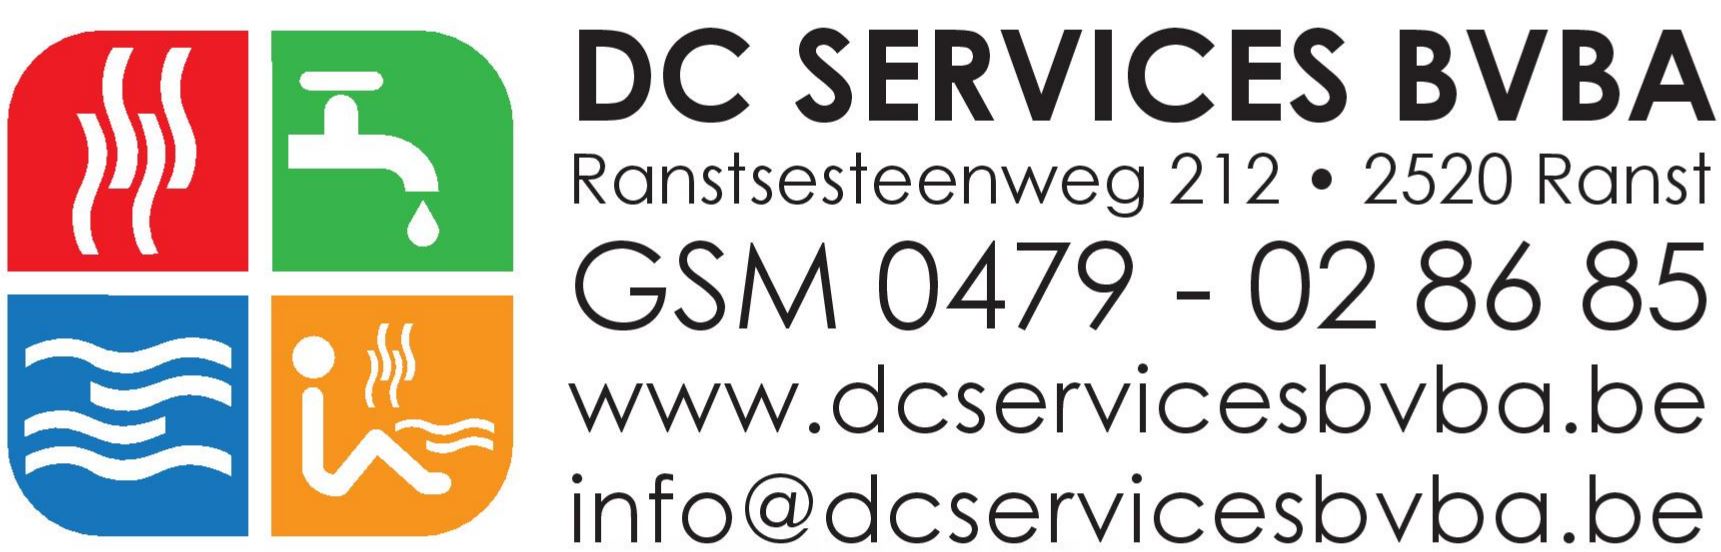 DC-Services-BVBA-page-001.jpg